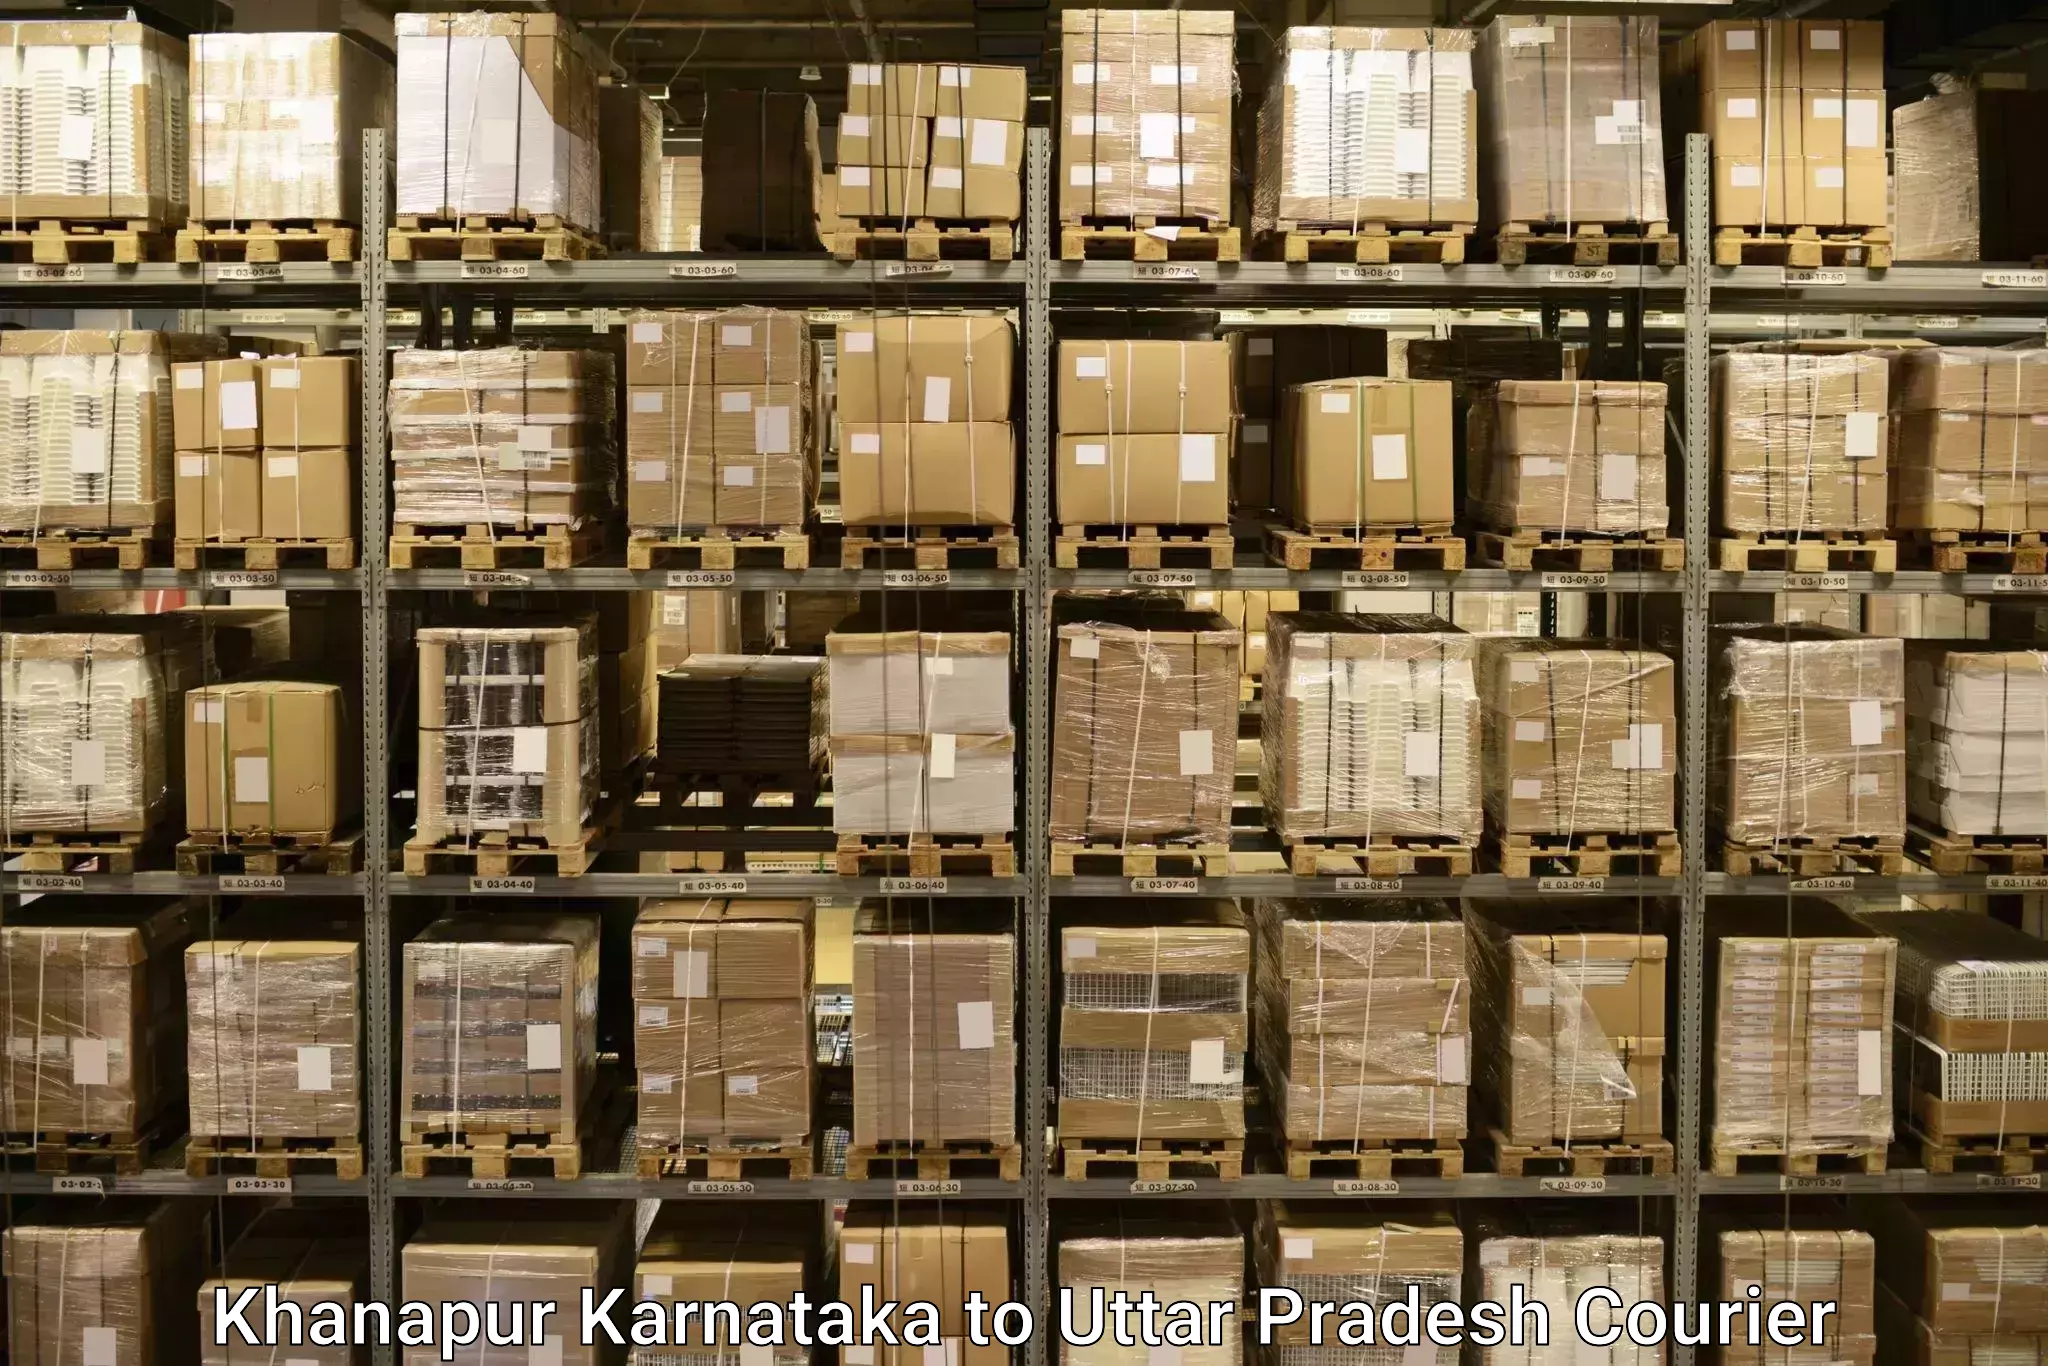 Baggage delivery technology Khanapur Karnataka to Budhana